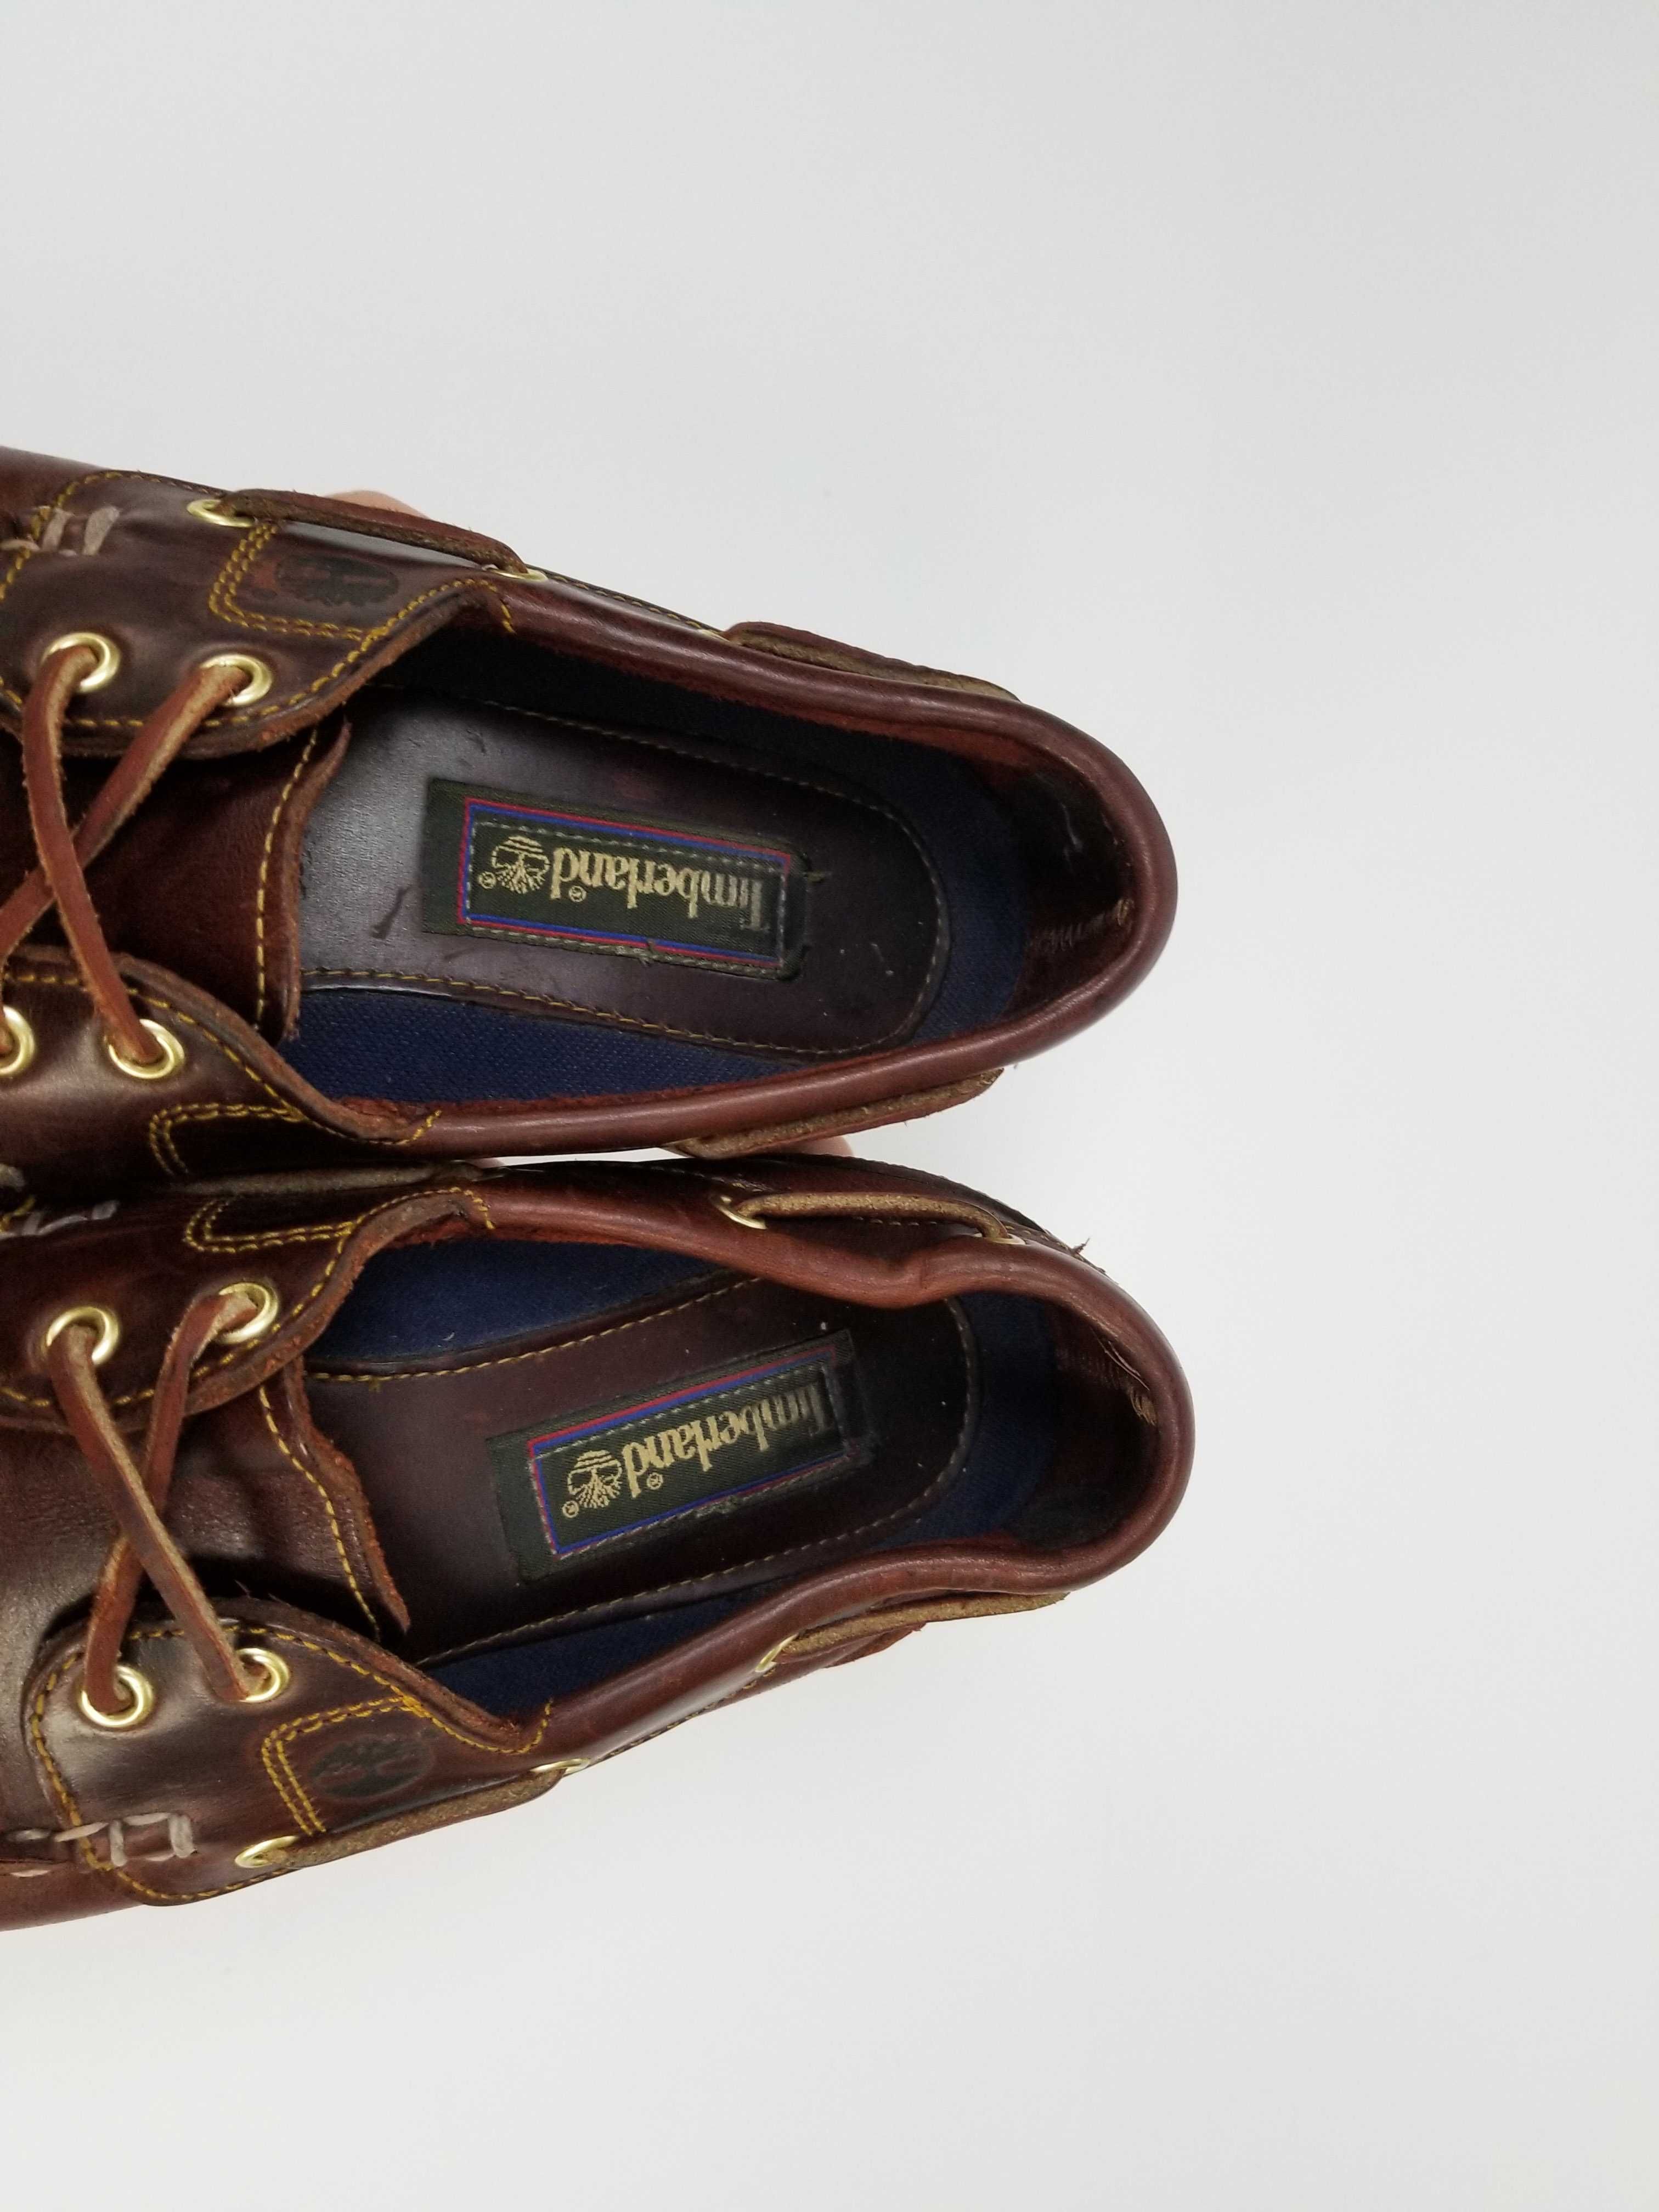 Timberland топсайдеры обувь на весну лето 38 39 24.5 см